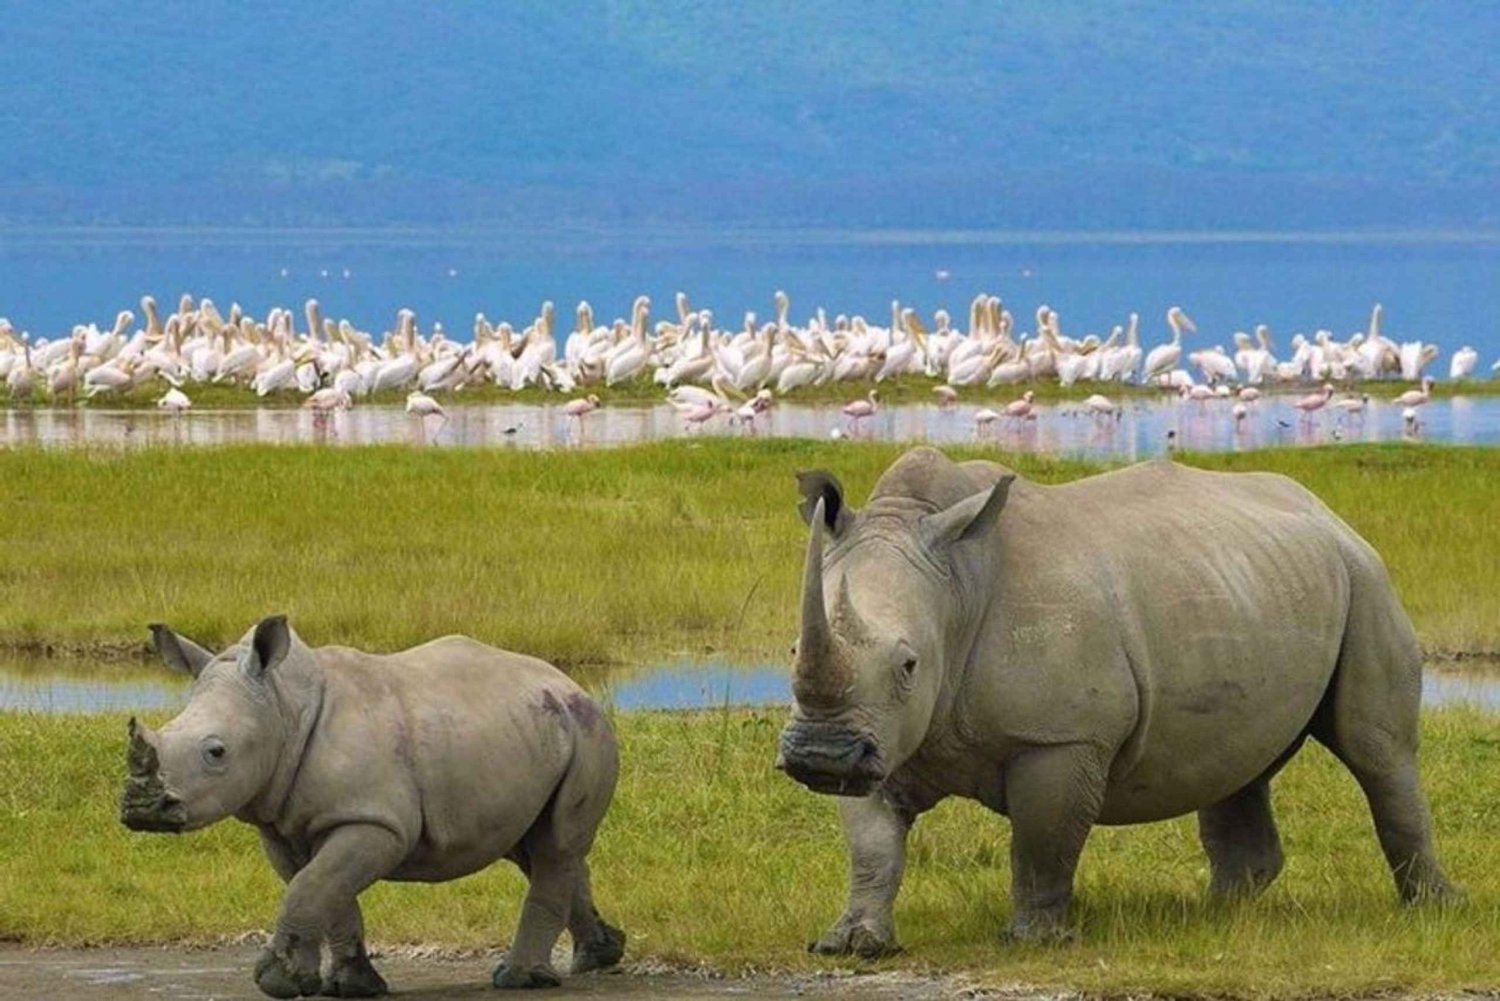 Nairobi: Nakuru National Park und Lake Naivasha Tagestour